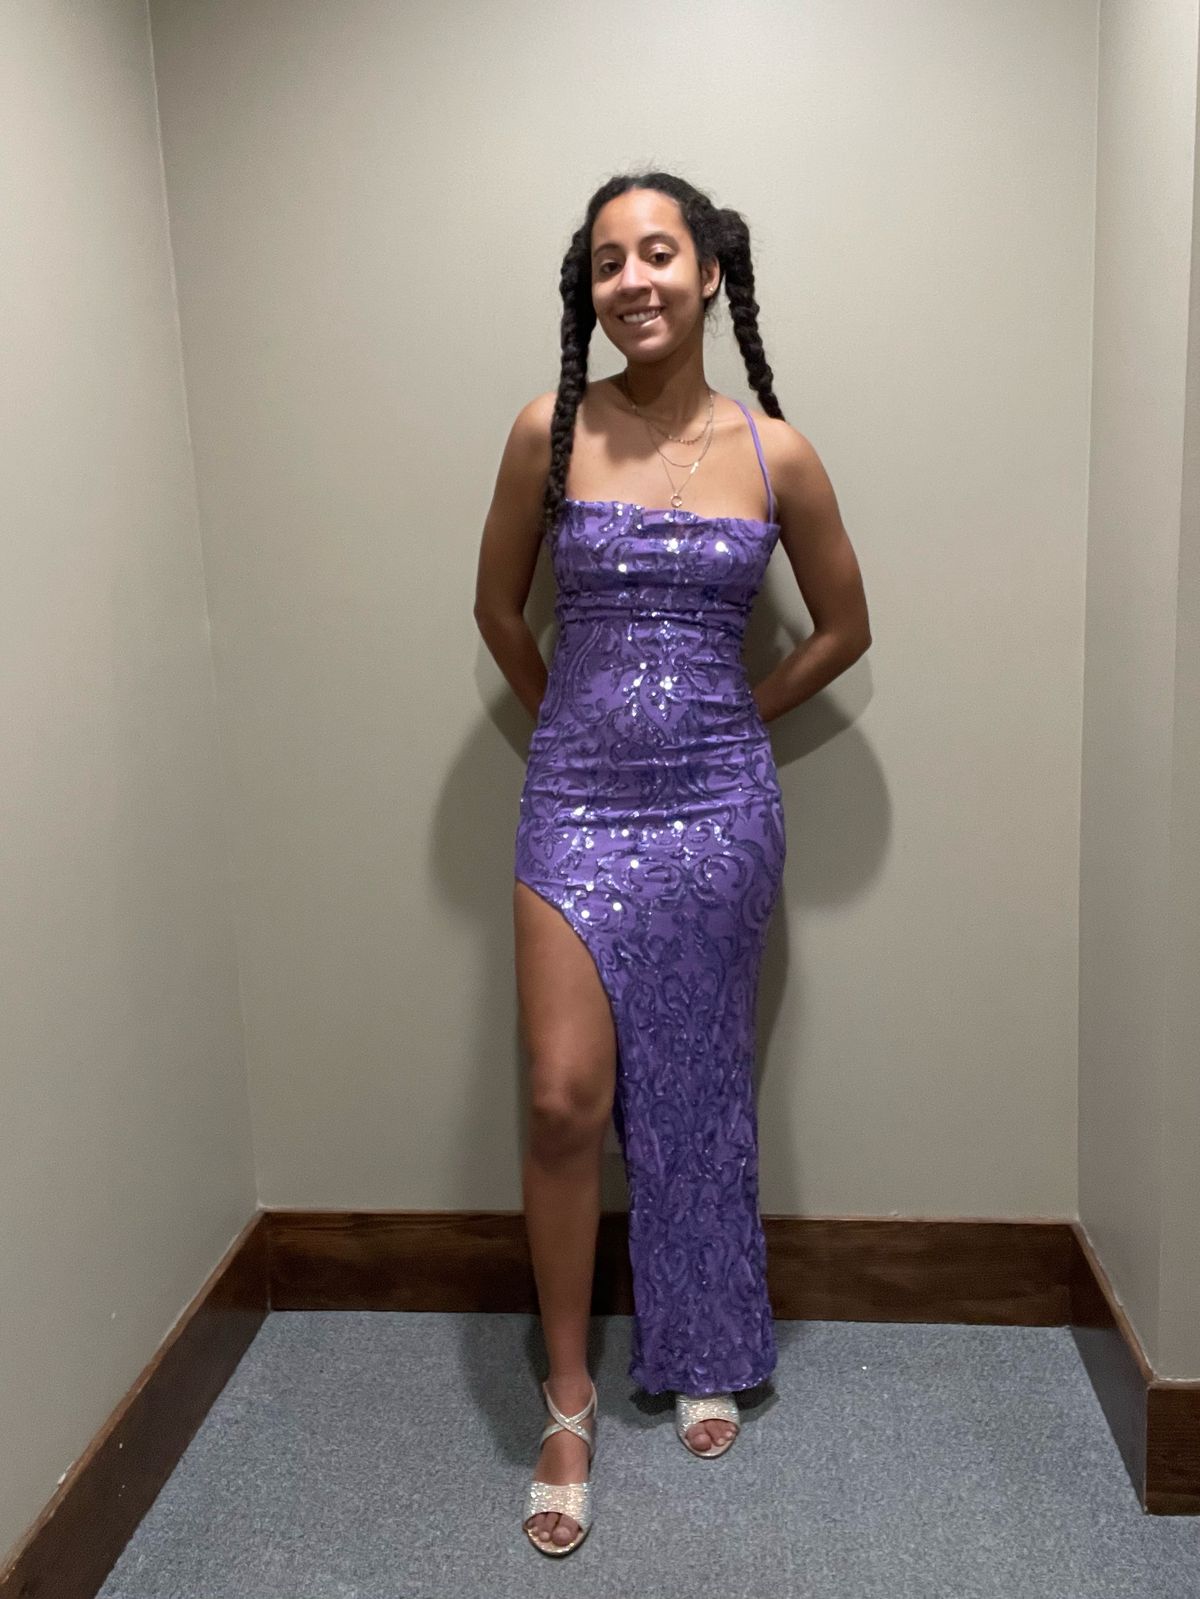 Windsor Size 6 Prom Purple Side Slit Dress on Queenly